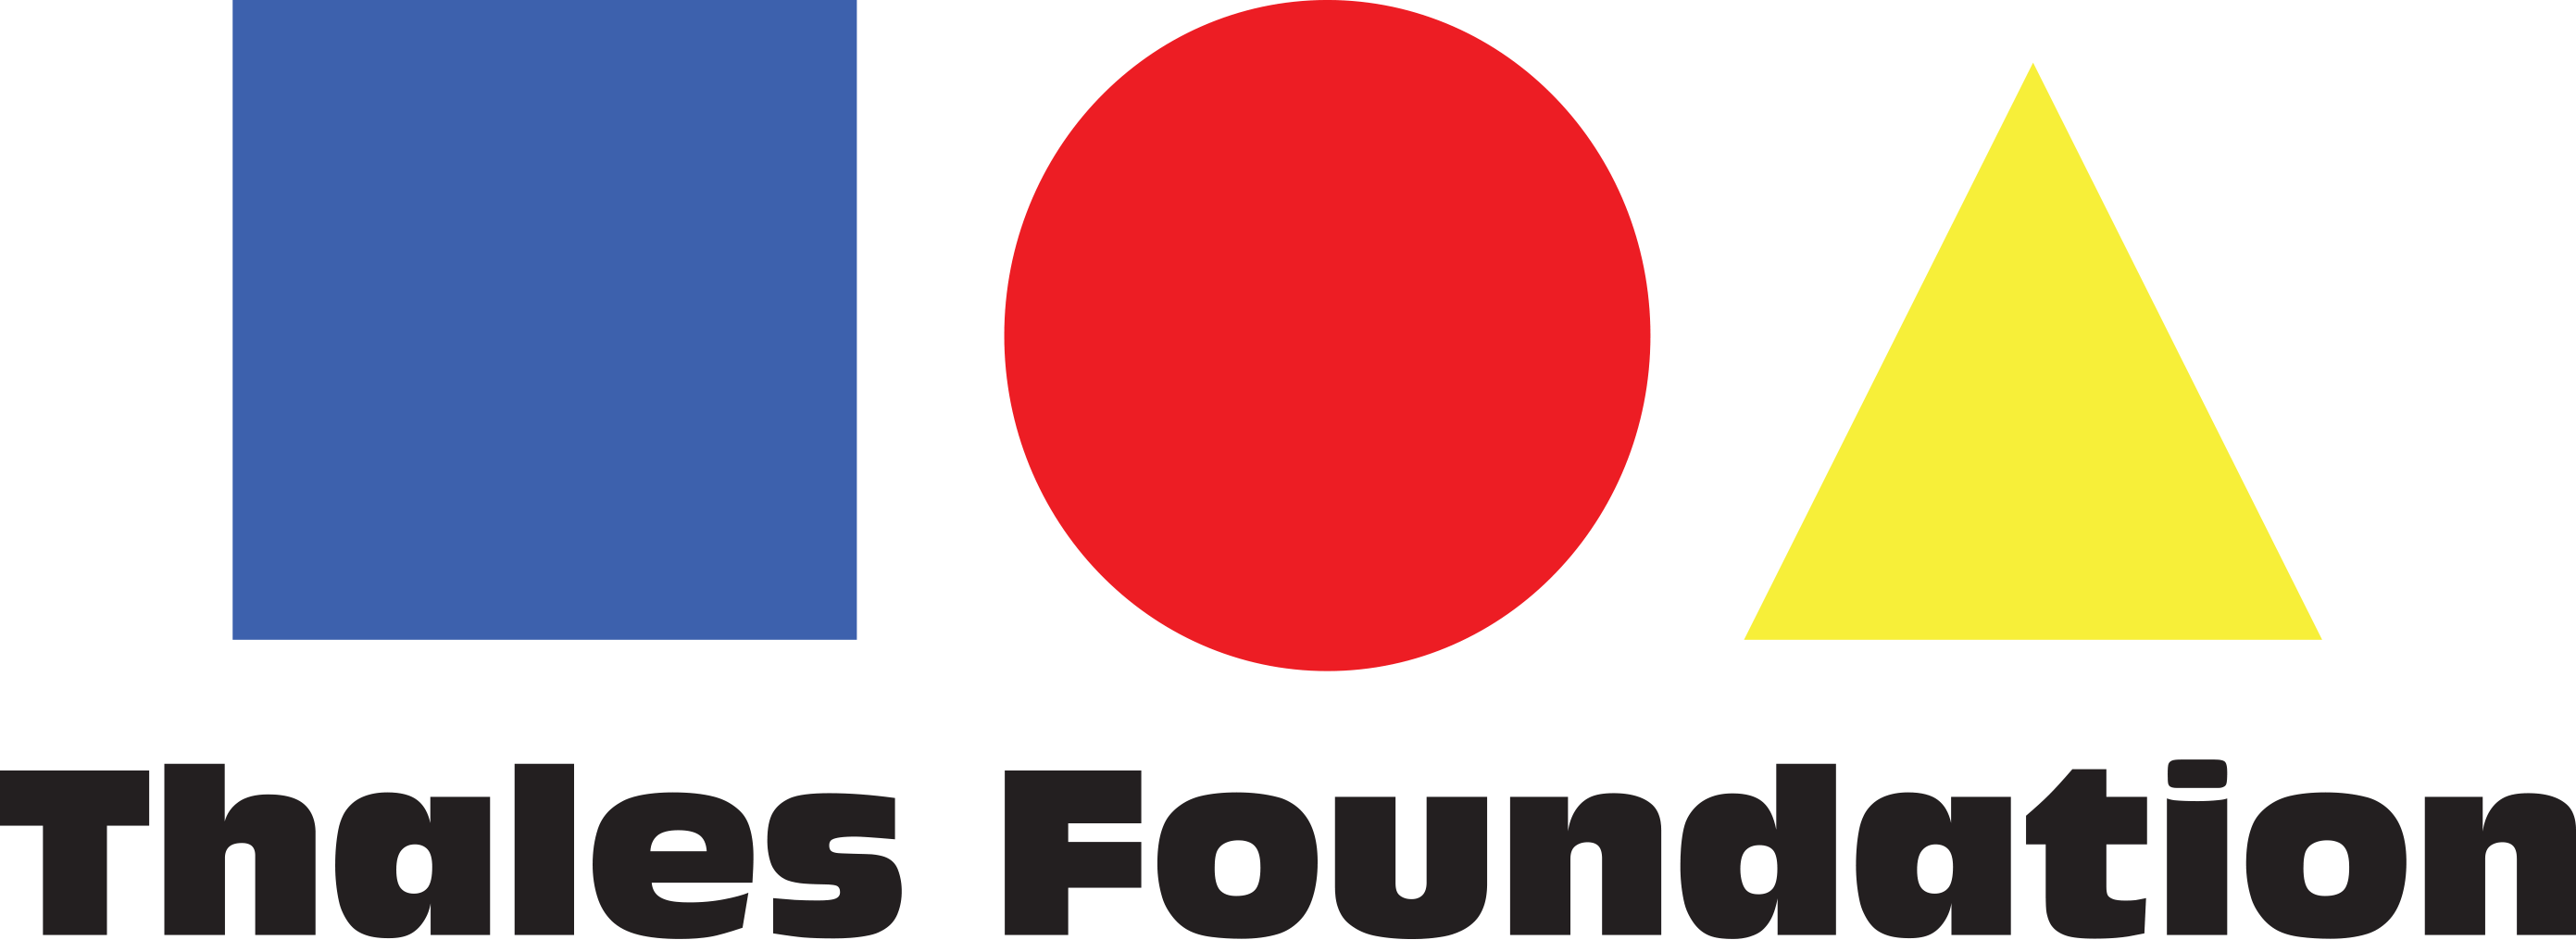 Thales Logo - Thales Foundation Cyprus